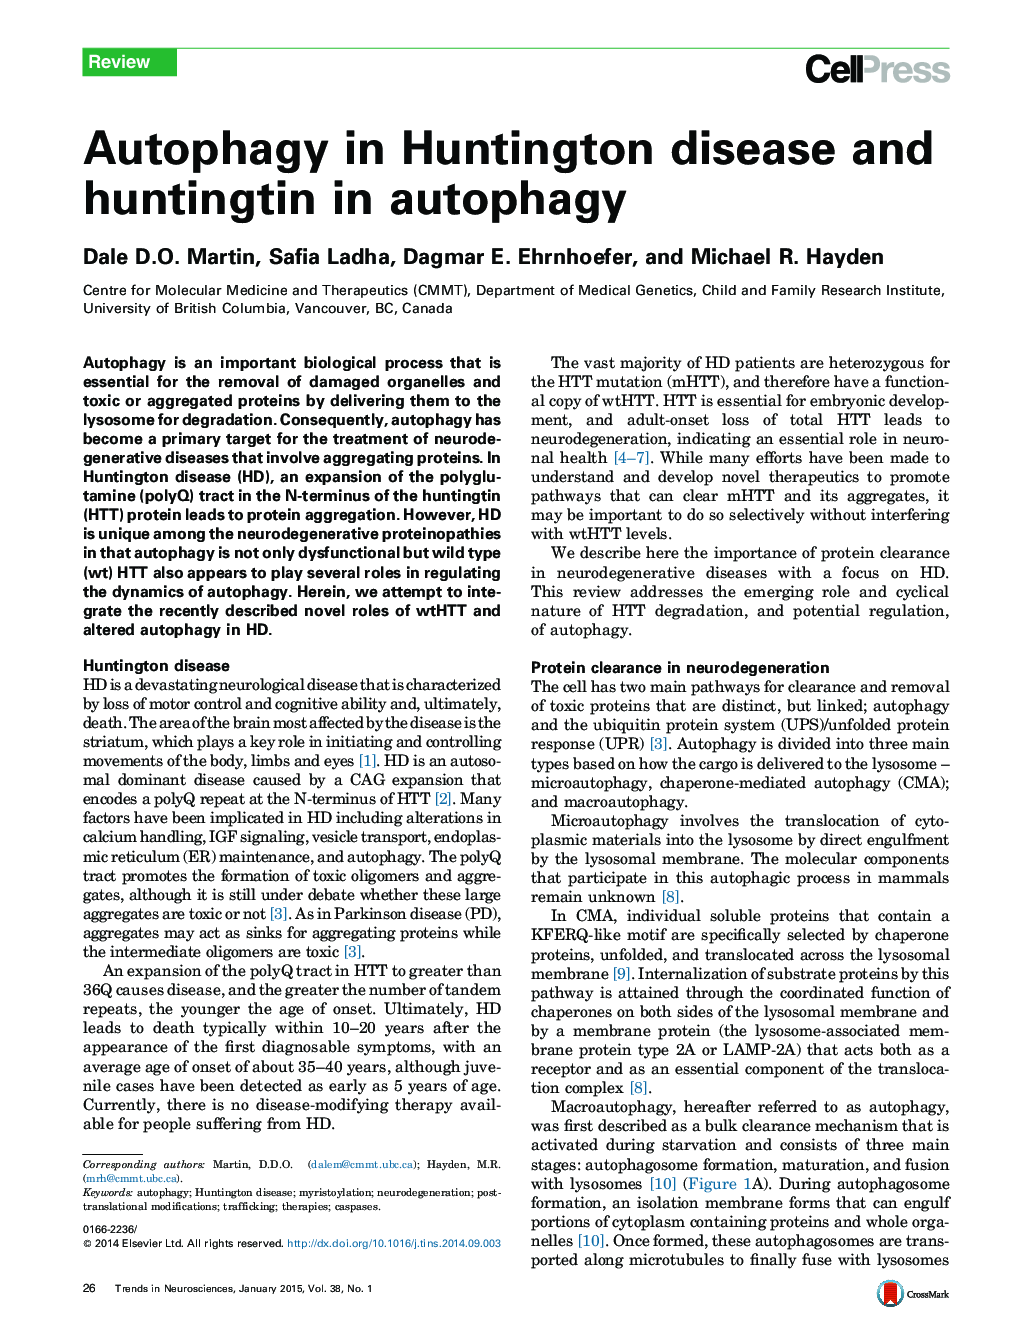 Autophagy in Huntington disease and huntingtin in autophagy